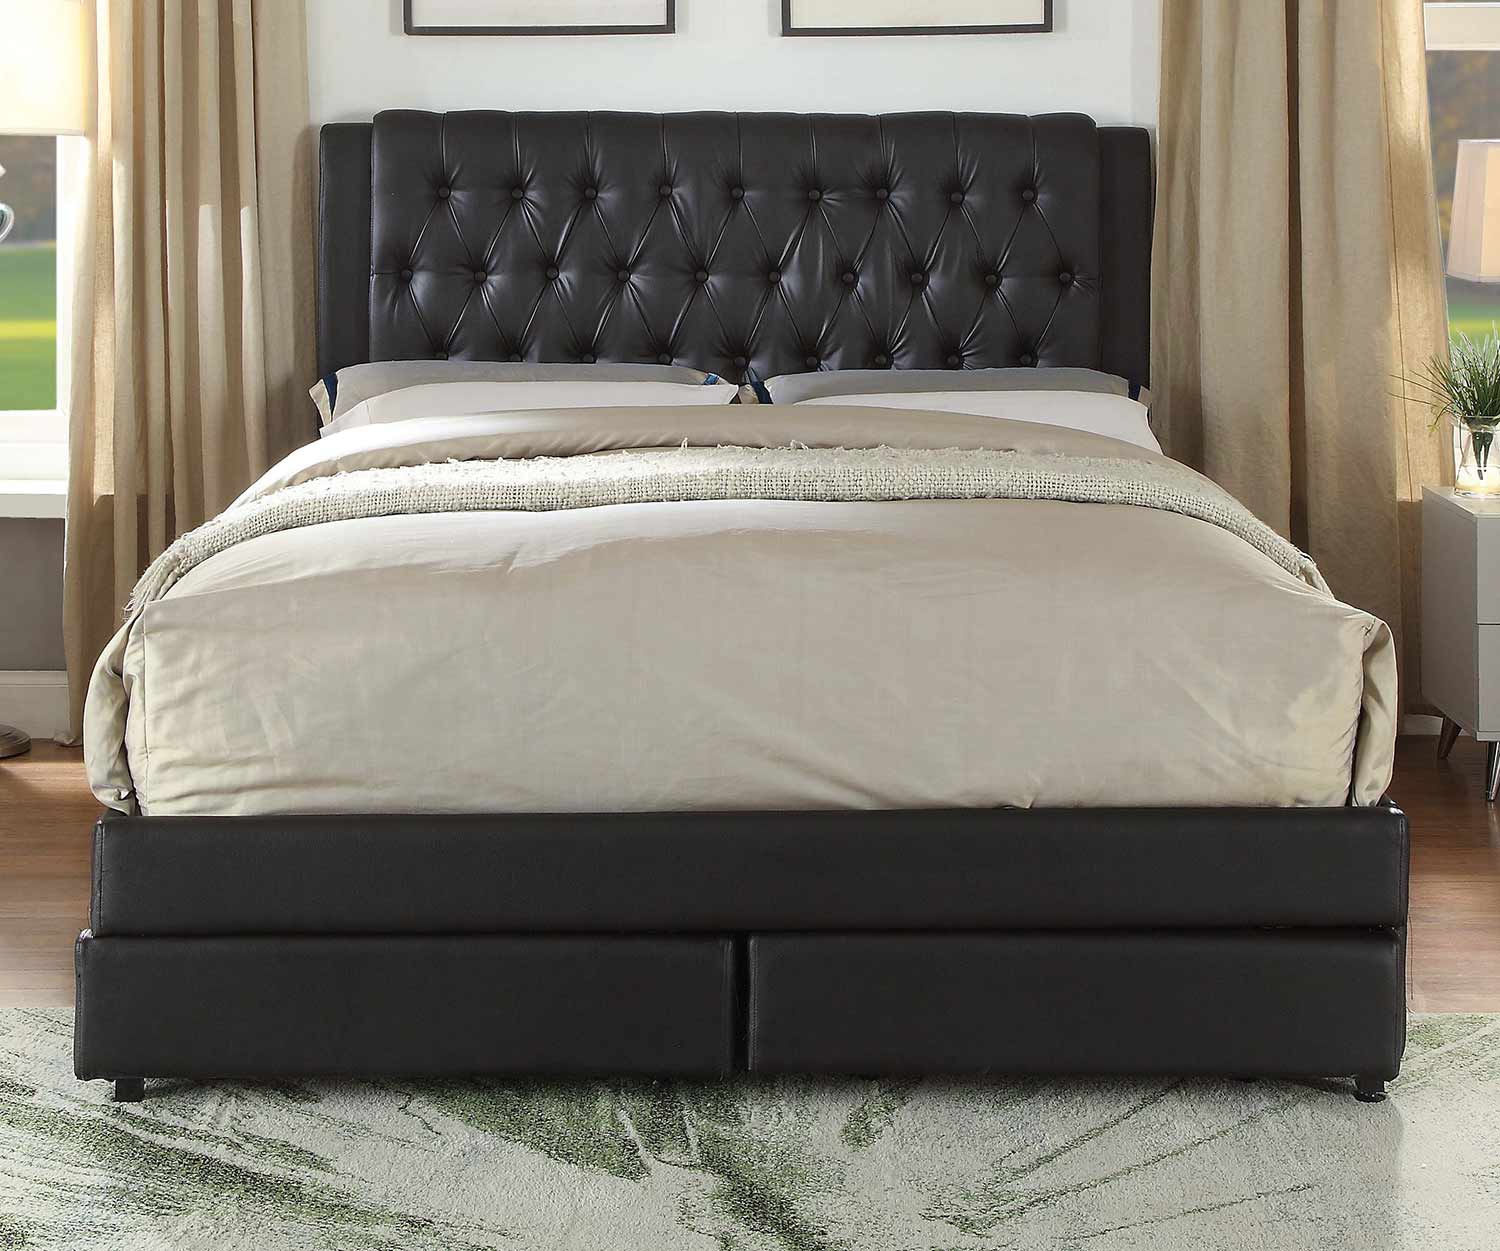 Acme Wibier Queen Bed with Storage - Espresso Vinyl